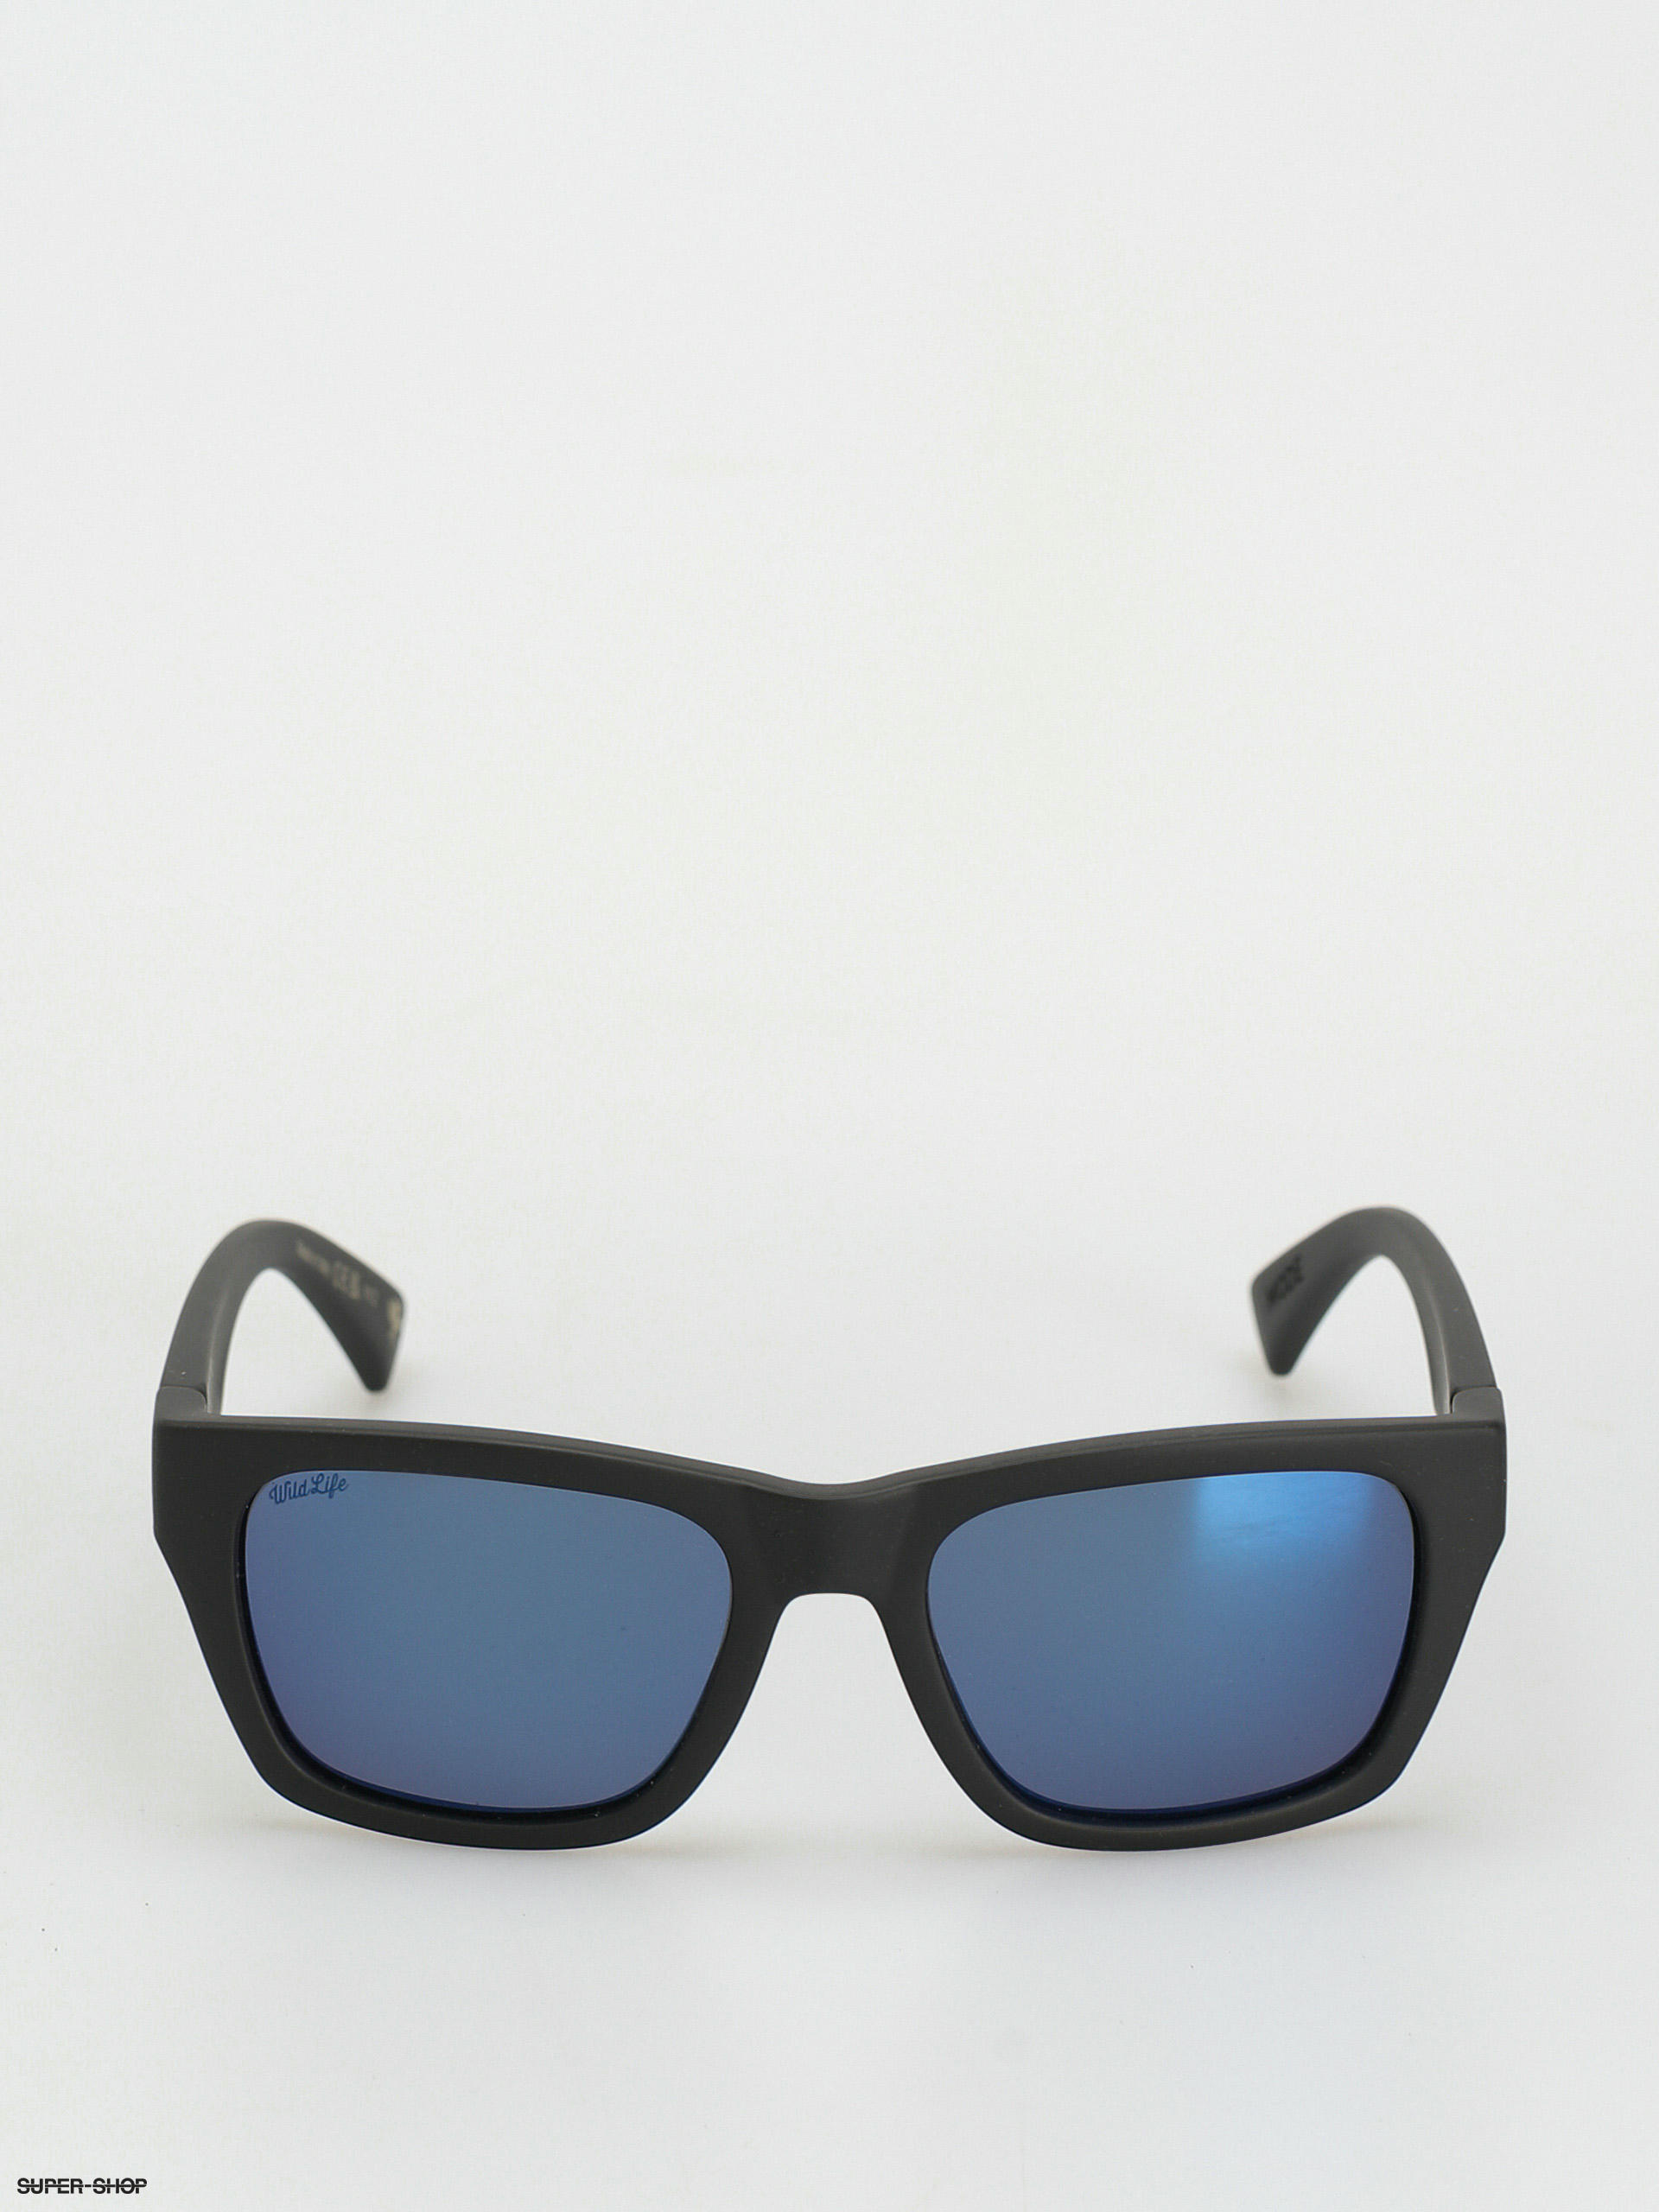 Von Zipper Mode sat/blu plr) Polar Sunglasses (blk flsh